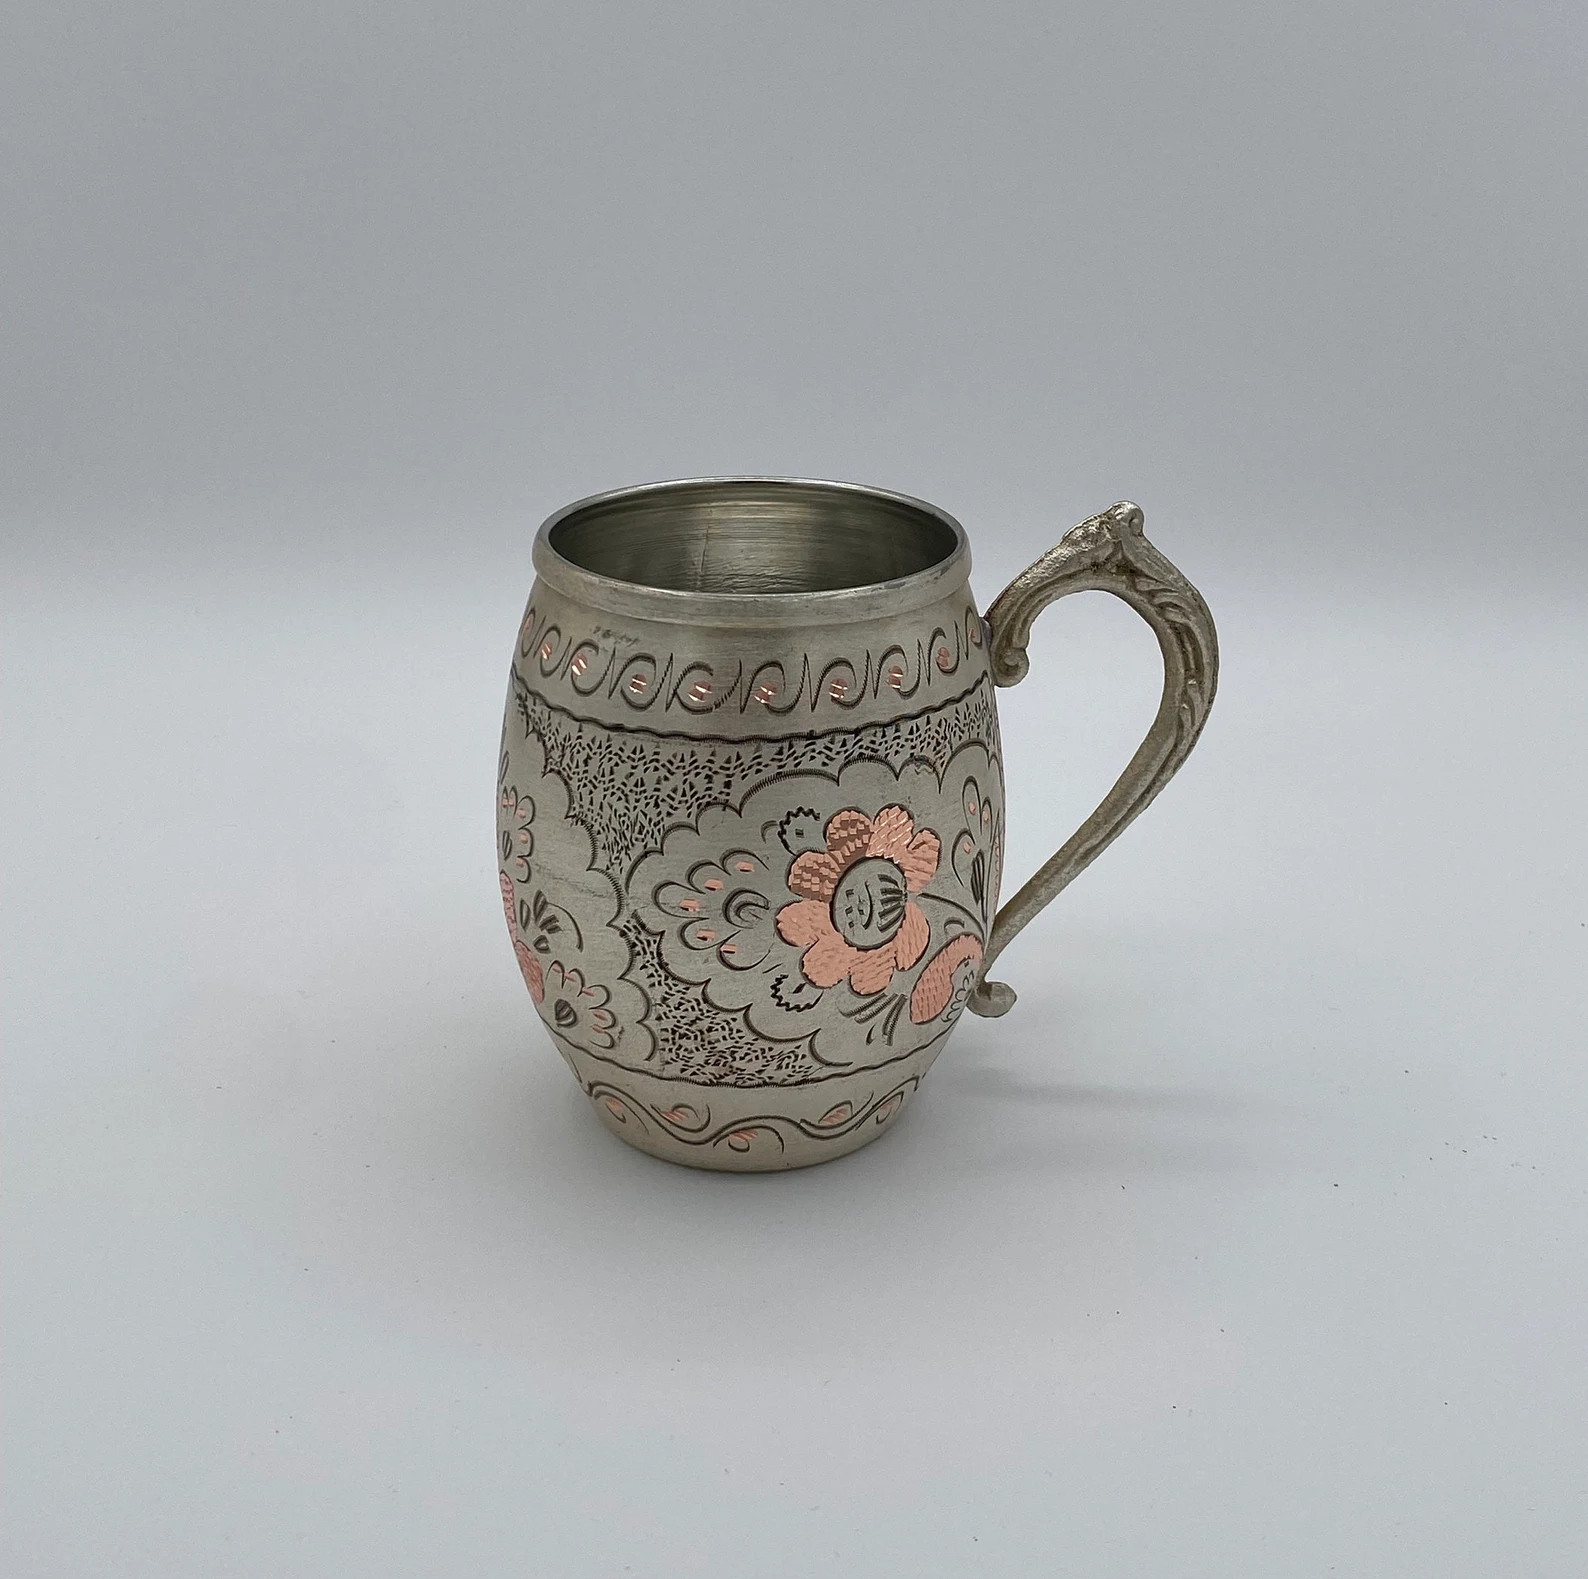 artisan moscow mule mug, hand crafted moscow mule mug